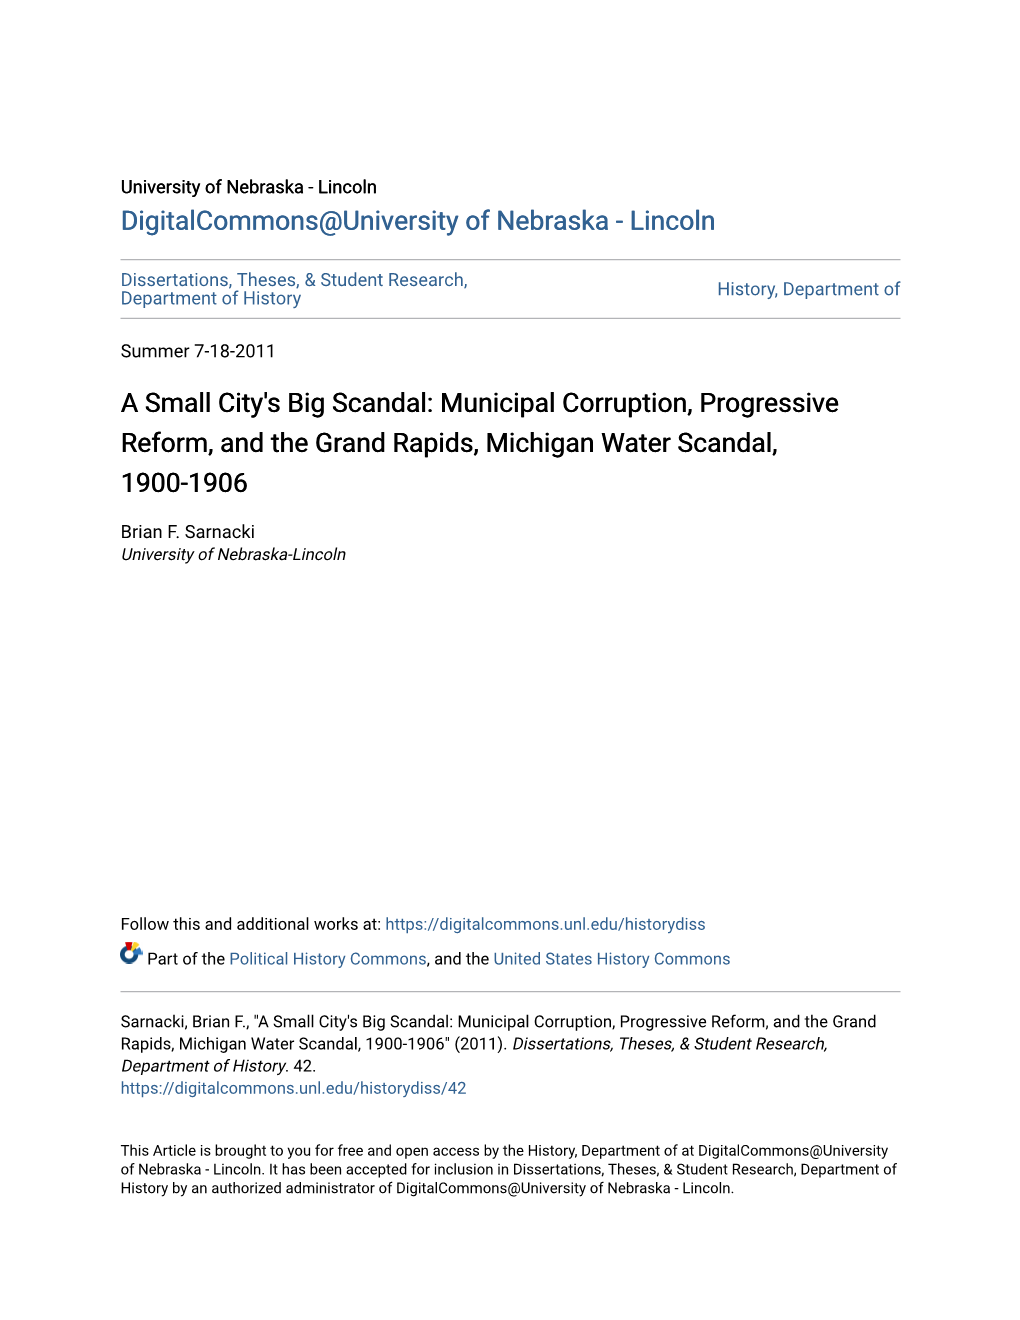 Municipal Corruption, Progressive Reform, and the Grand Rapids, Michigan Water Scandal, 1900-1906